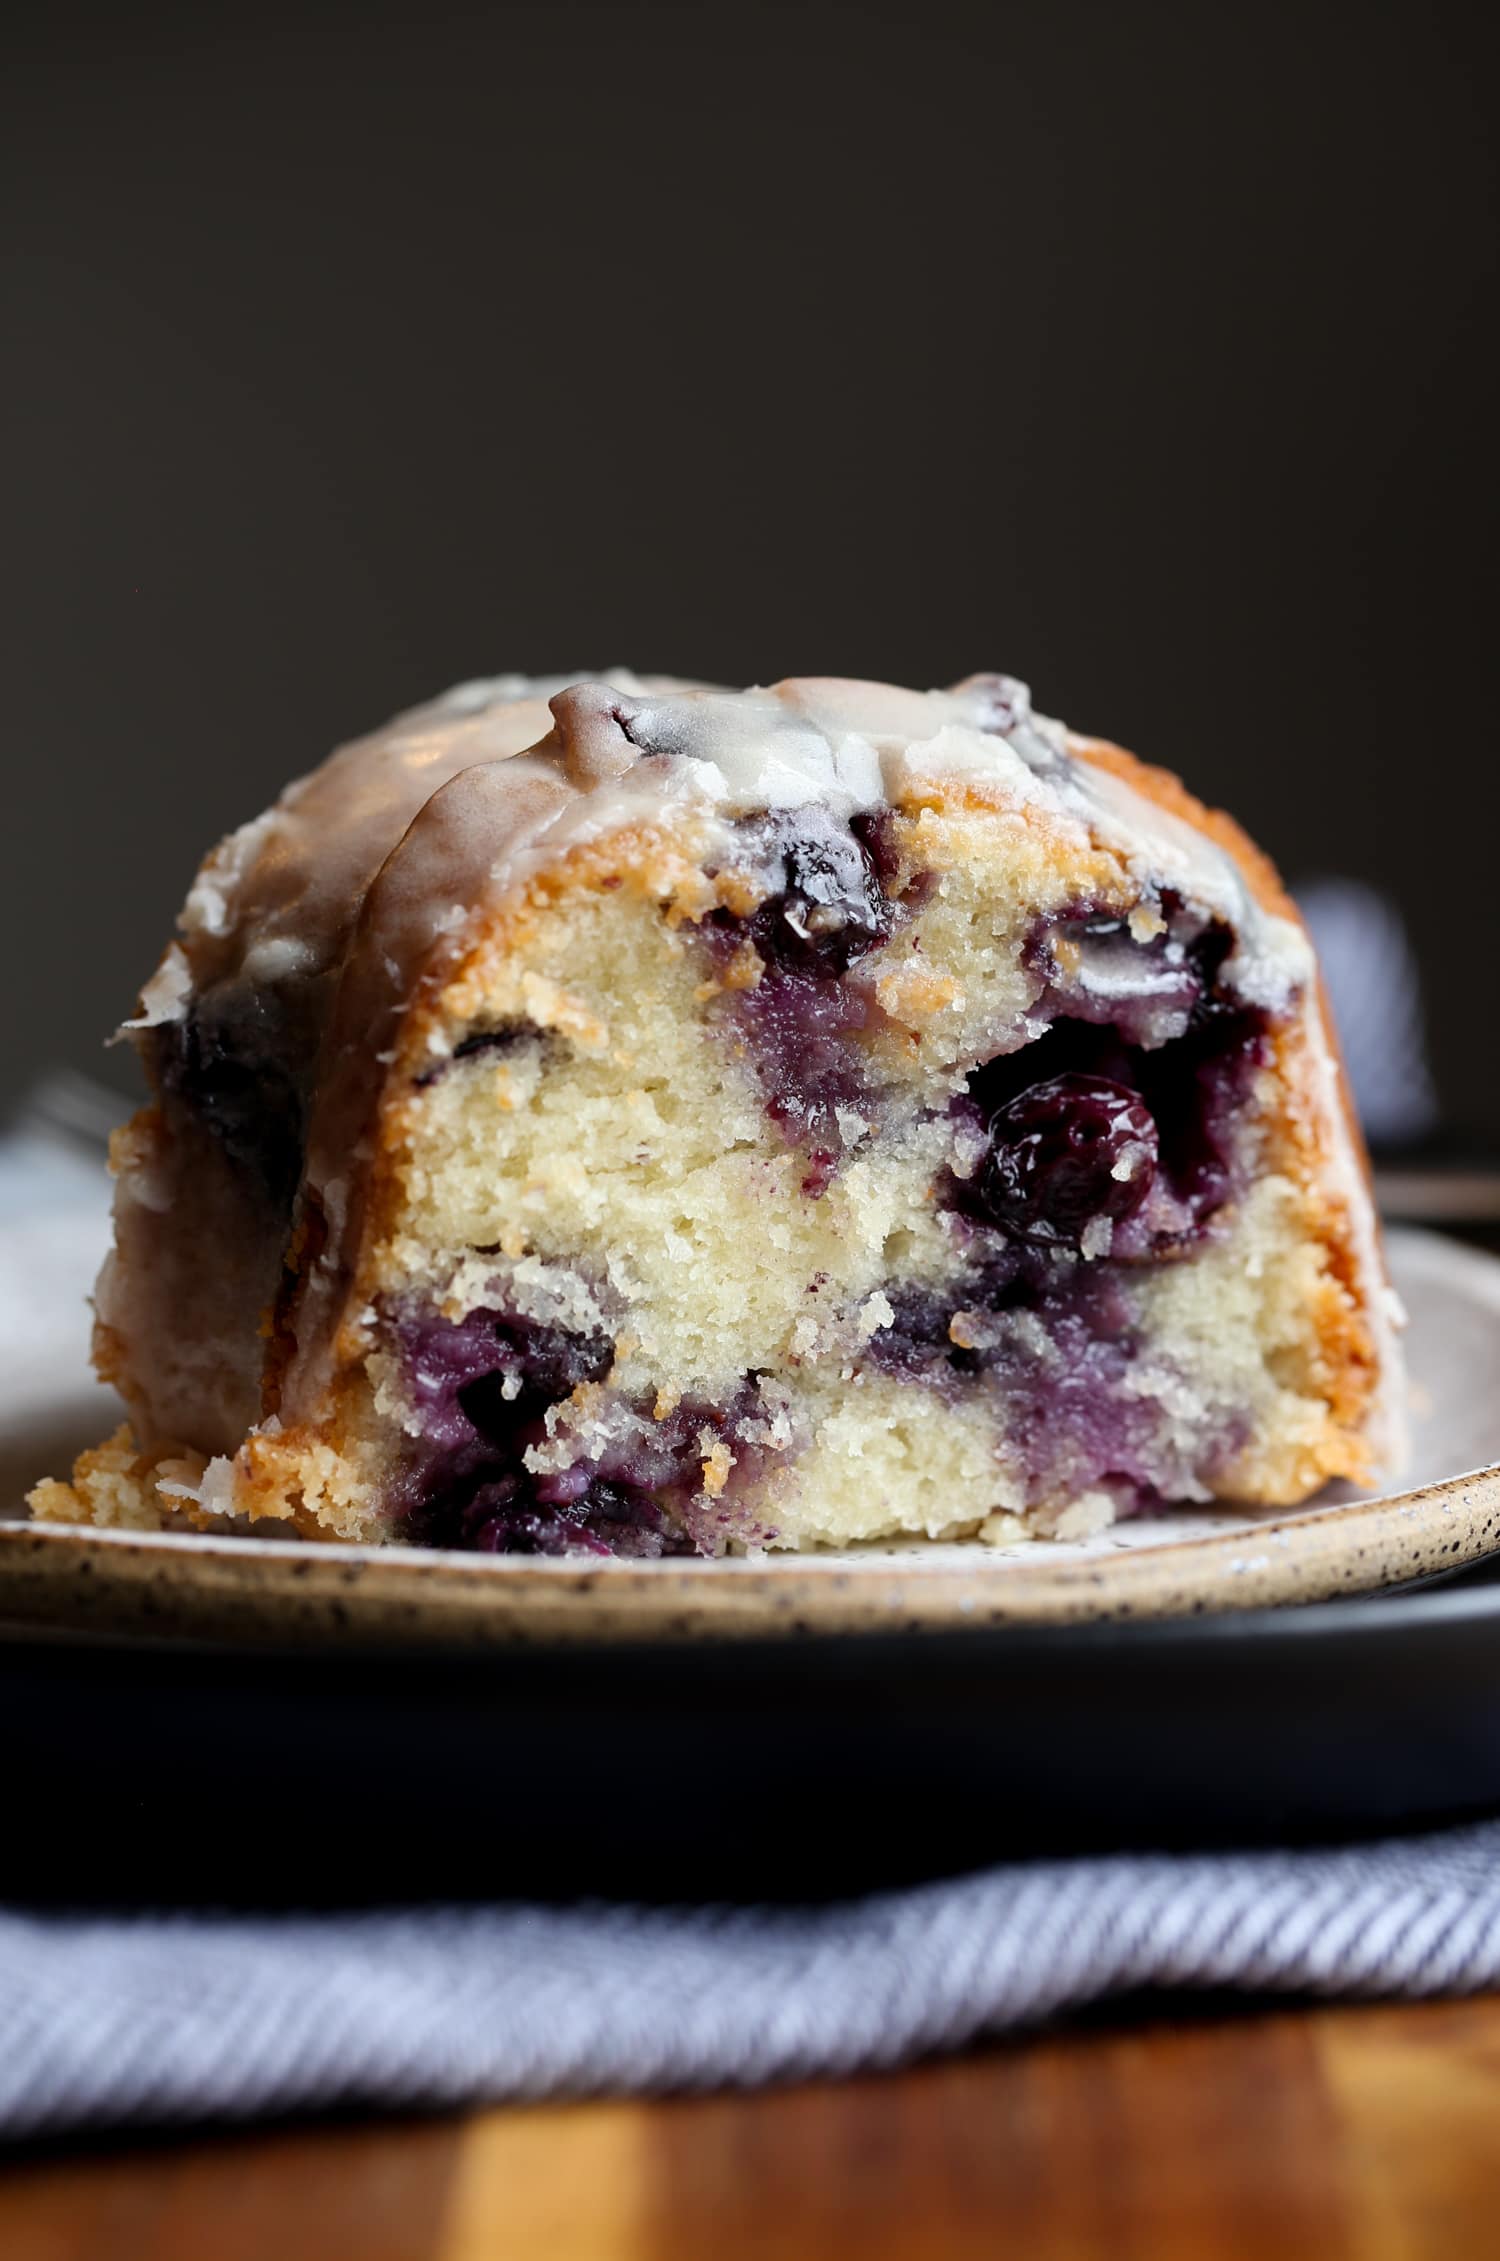 Aggregate more than 126 blueberry sour cream cake super hot - kidsdream ...